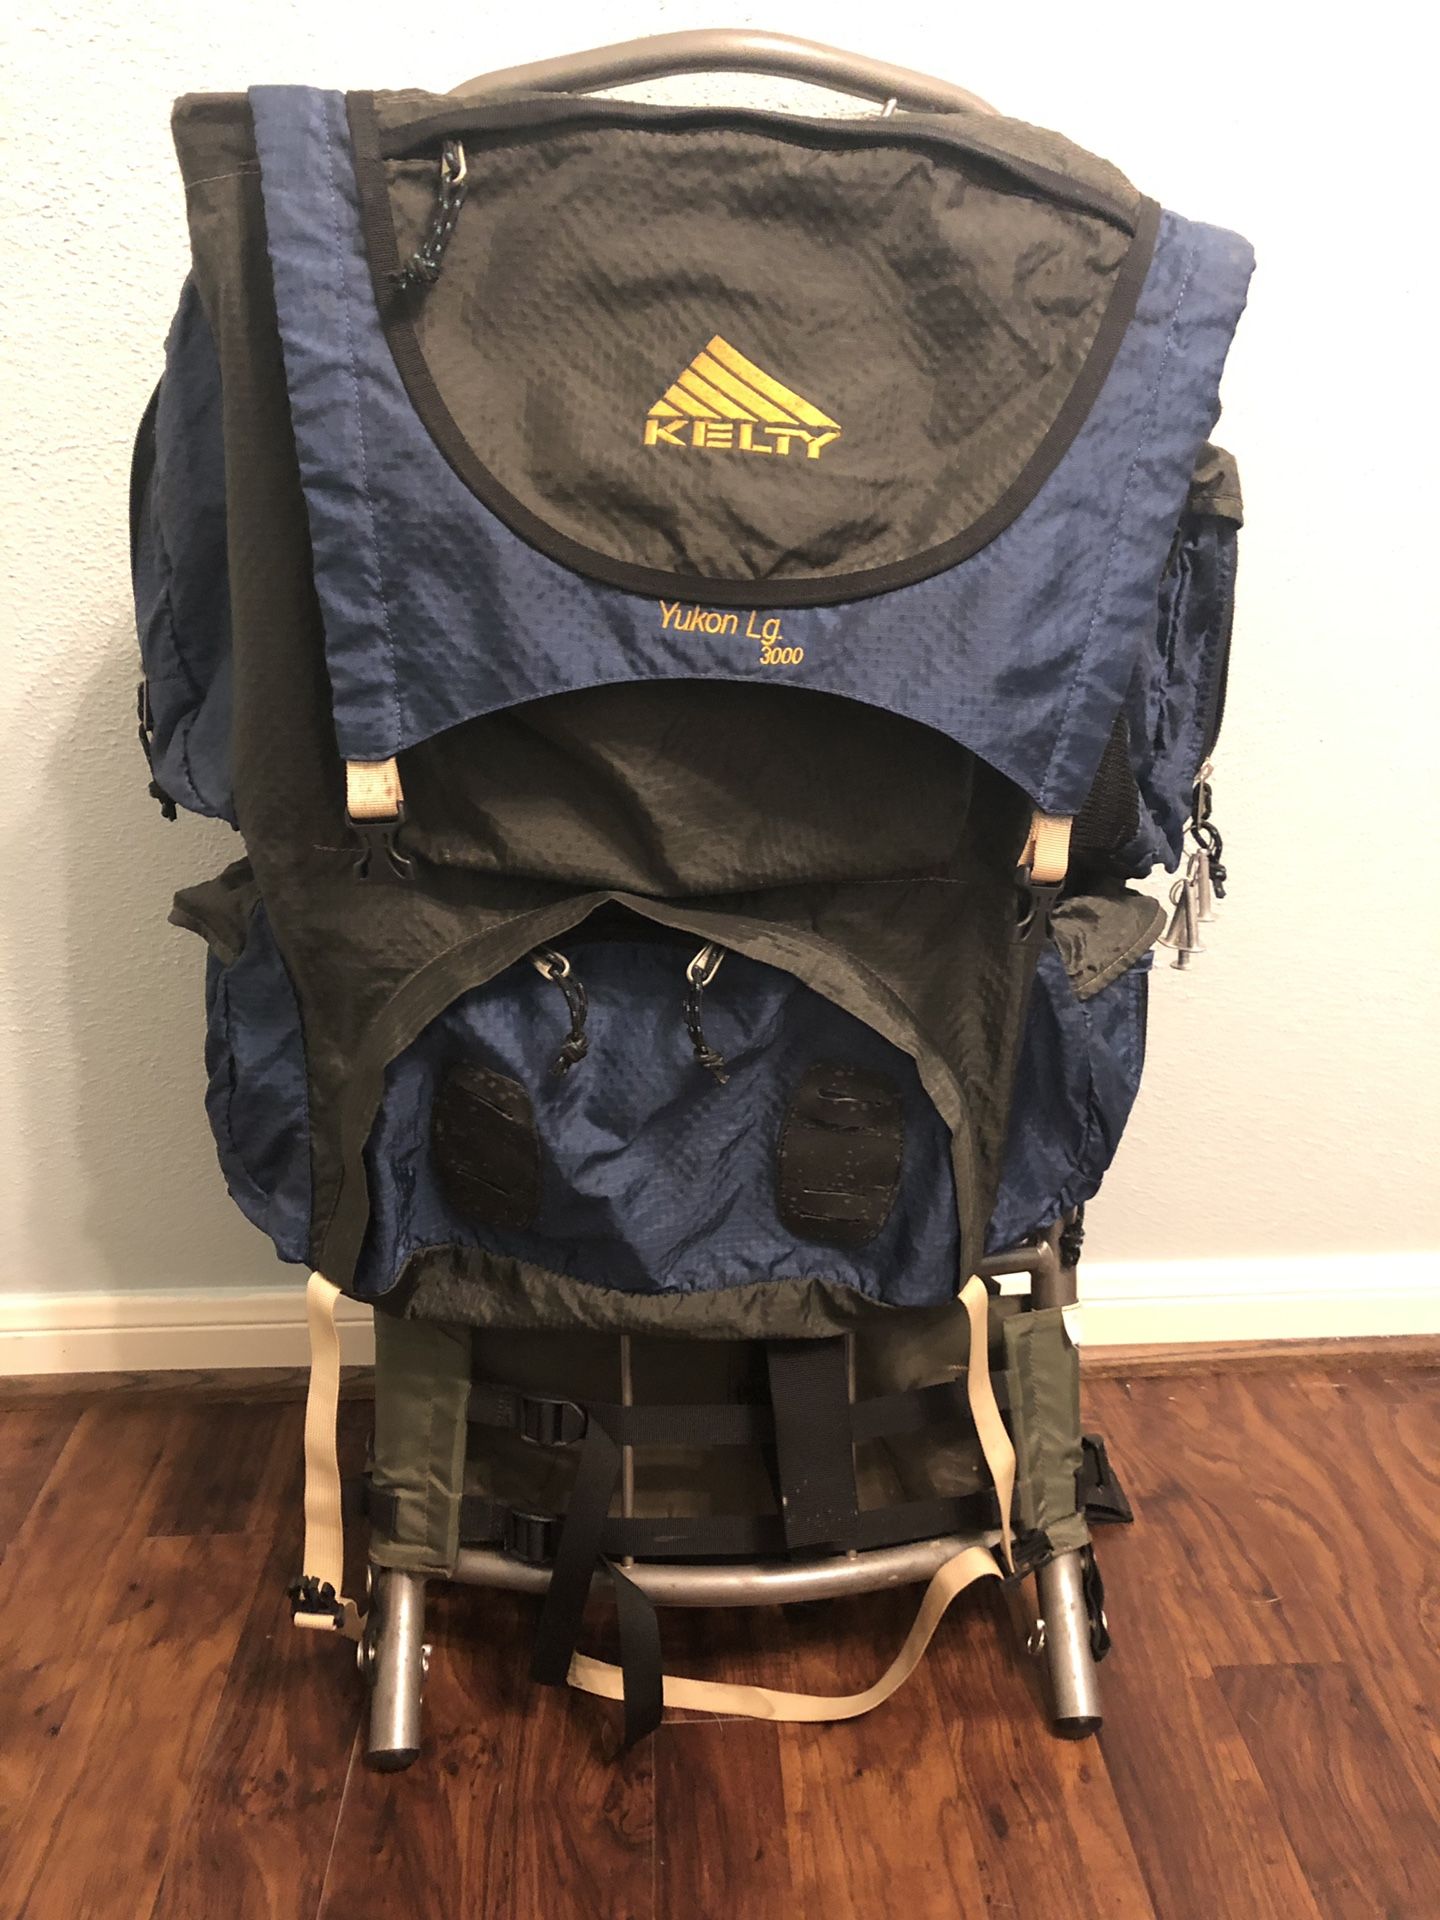 Kelty Yukon Lg 3000 hiking backpack